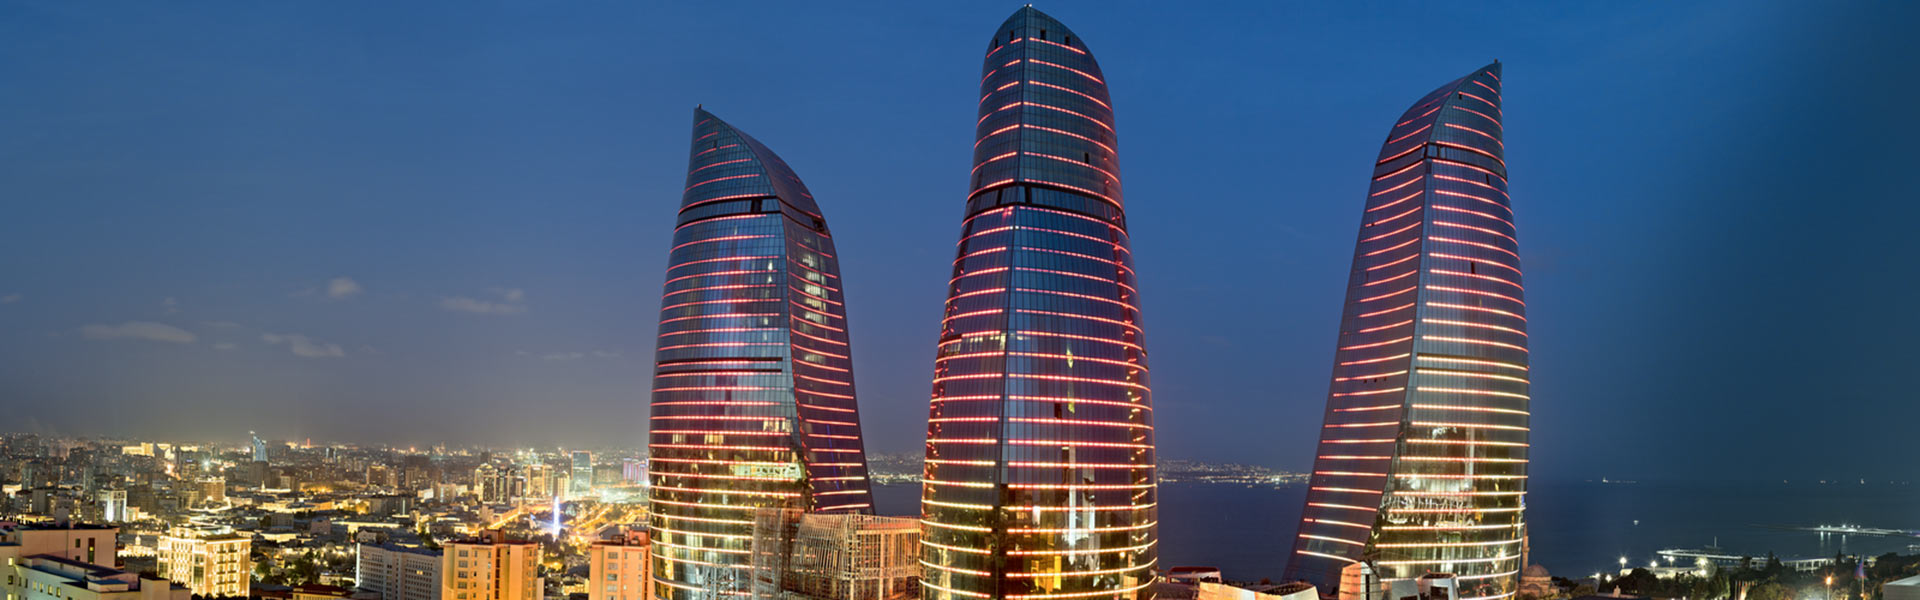 Tourism in Azerbaijan